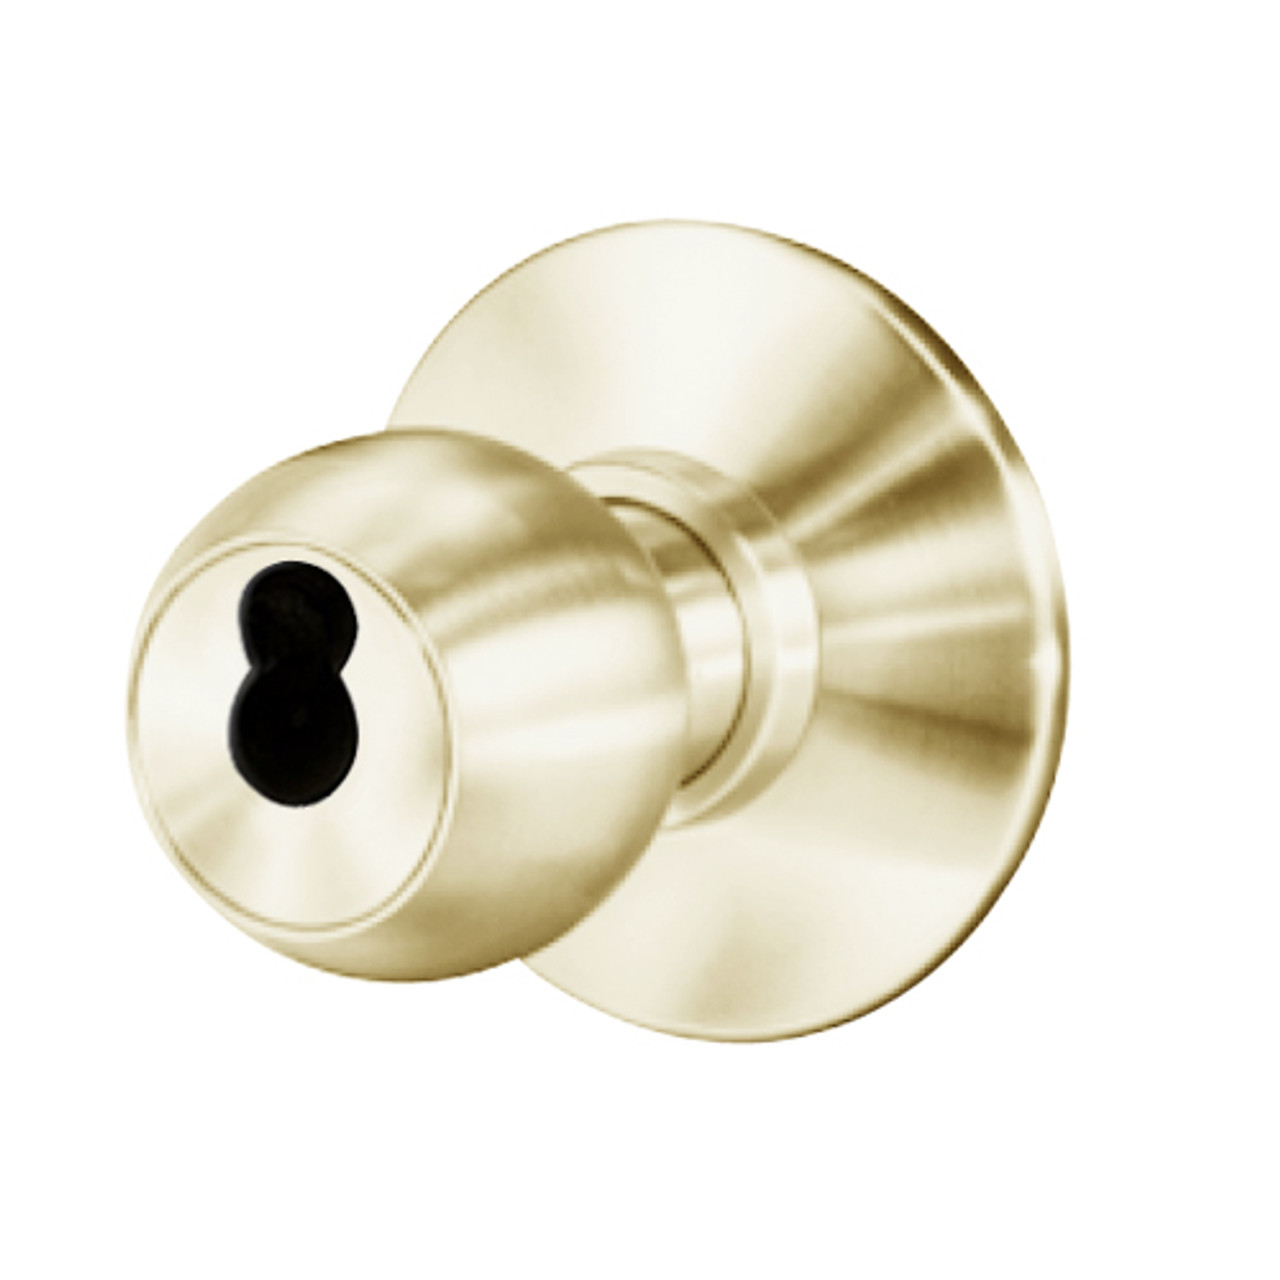 8K37W4DSTK606 Best 8K Series Institutional Heavy Duty Cylindrical Knob Locks with Round Style in Satin Brass